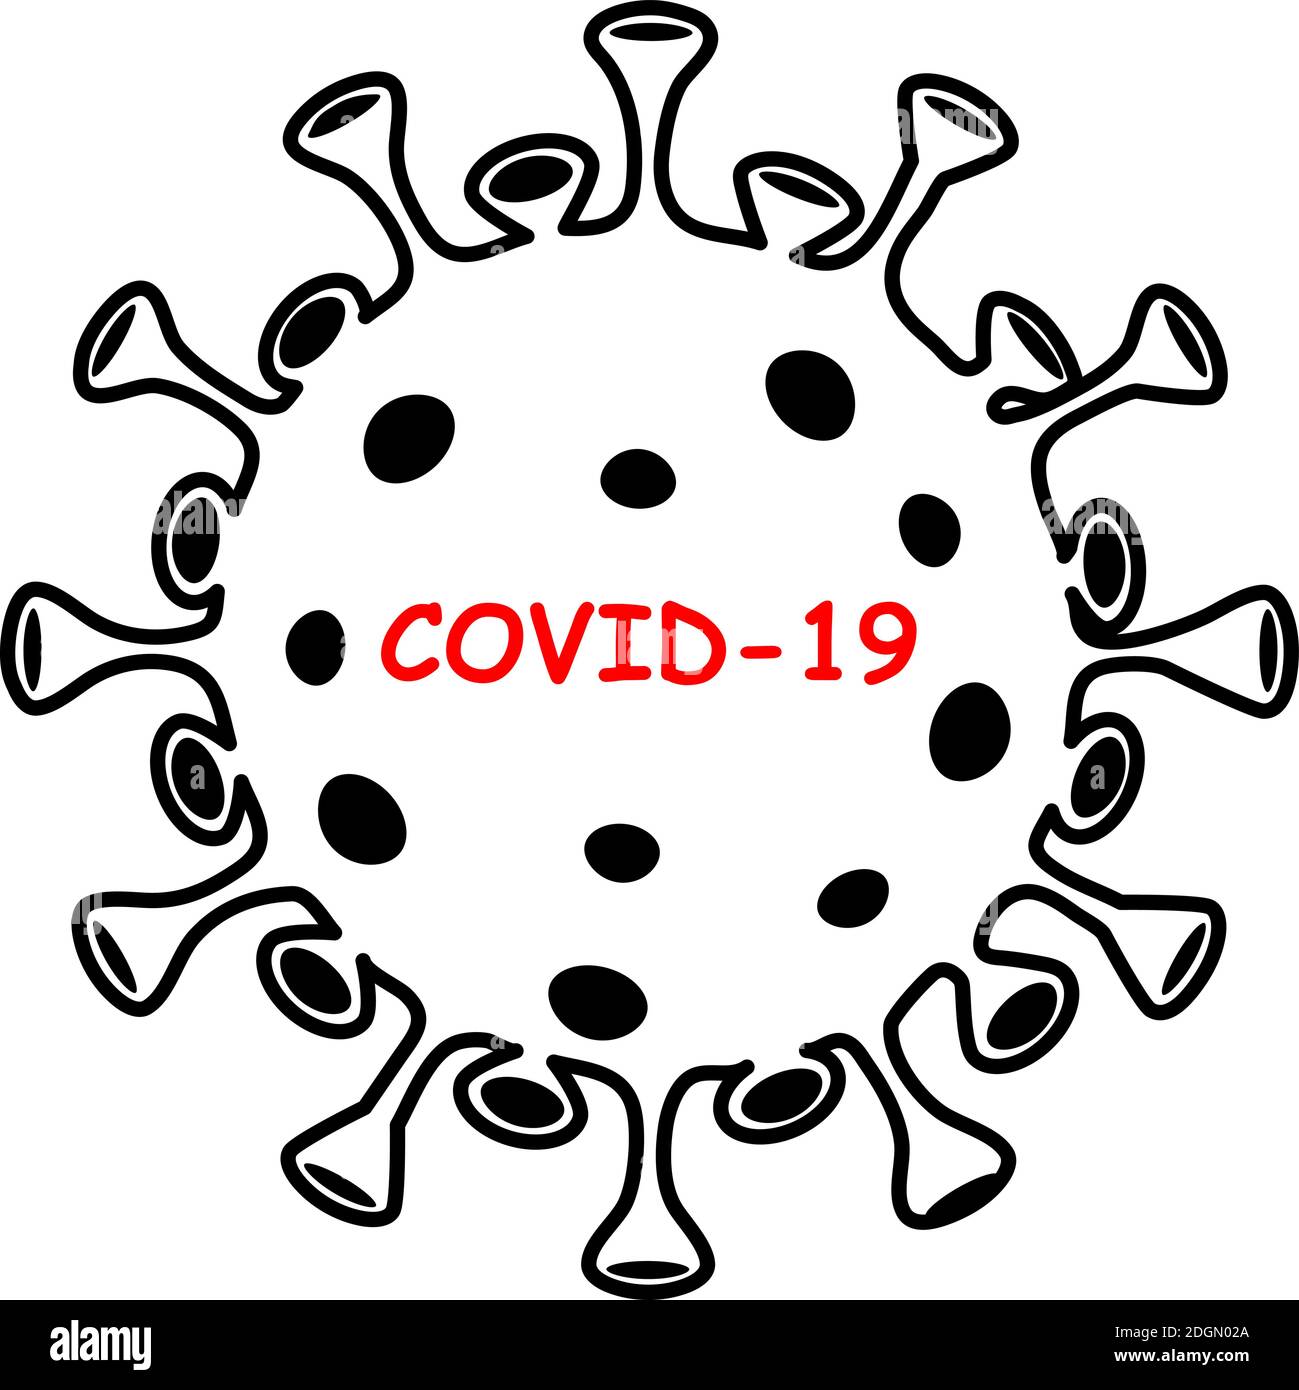 Coronavirus COVID-19 icon. Black sign  of virus on white background. isolated. China pathogen respiratory infection (asian flu outbreak). influenza Stock Vector